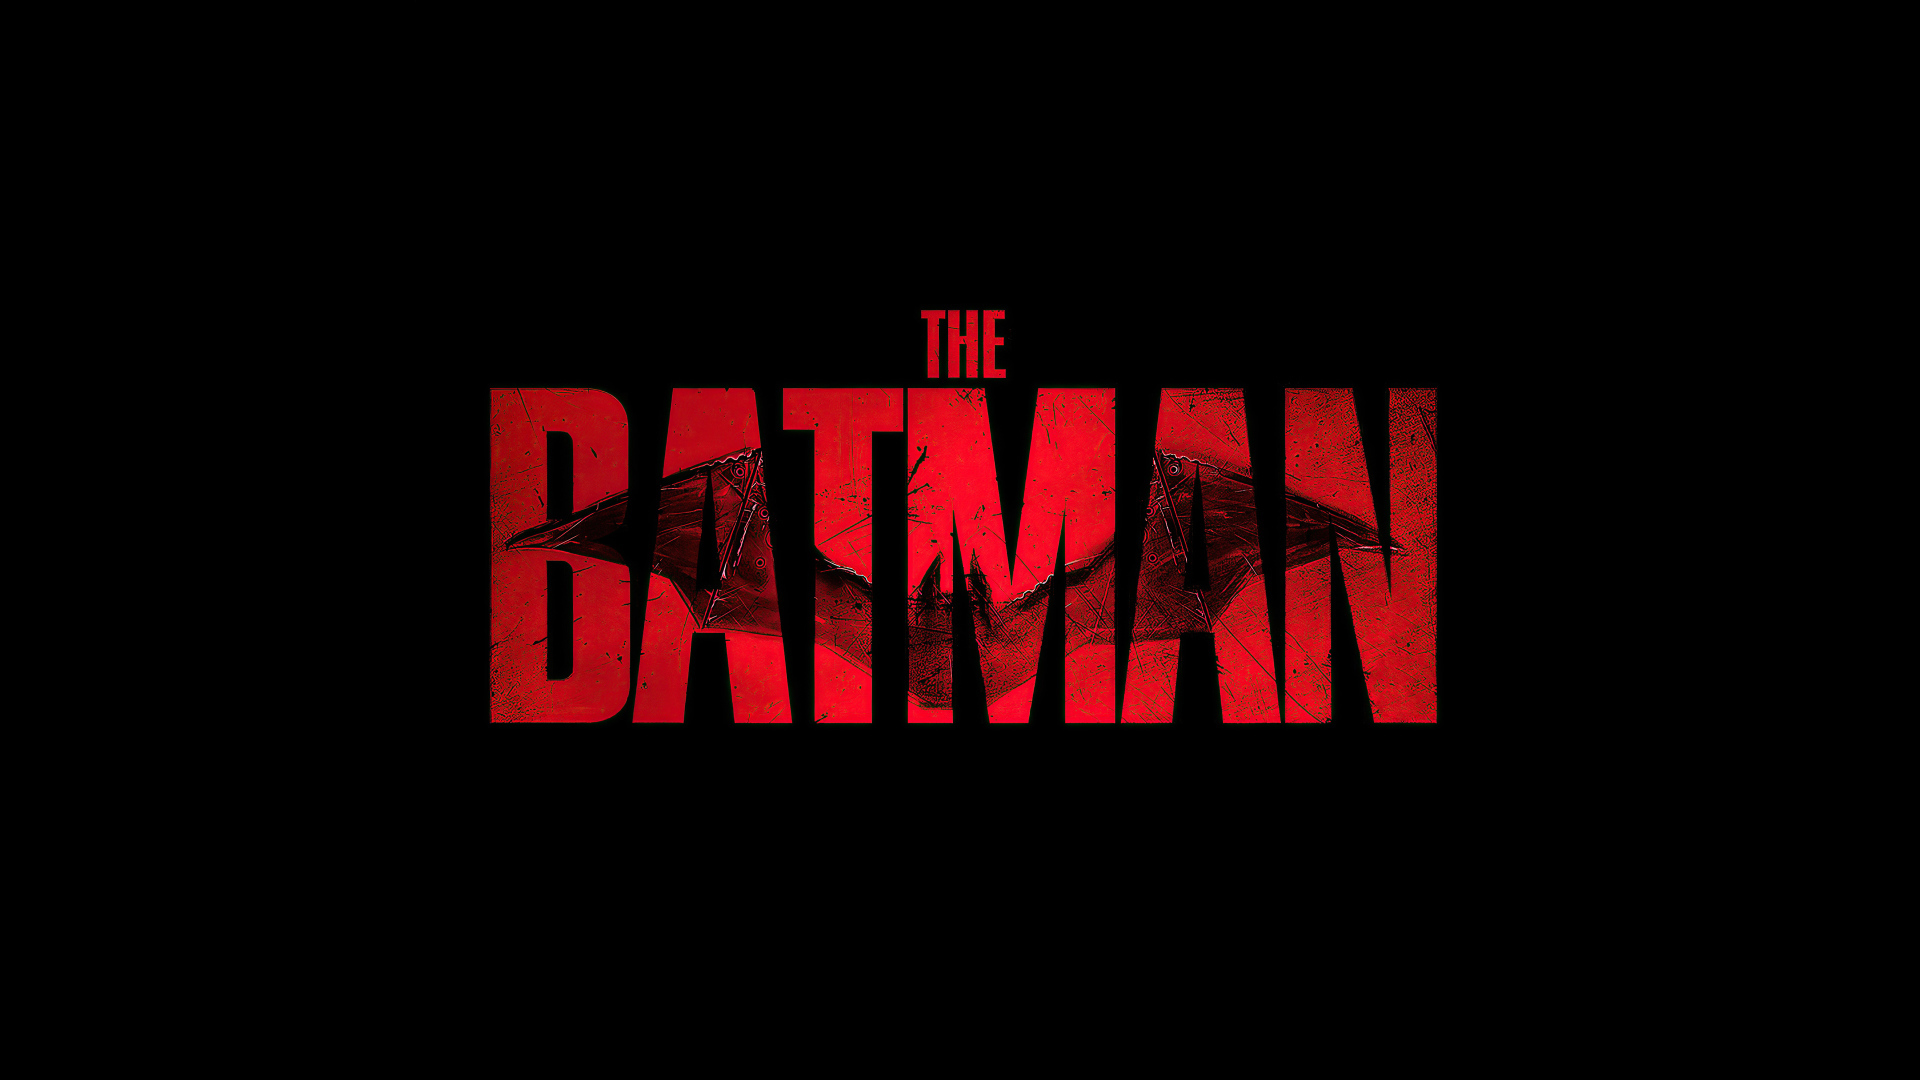 Batman movie logo on black background